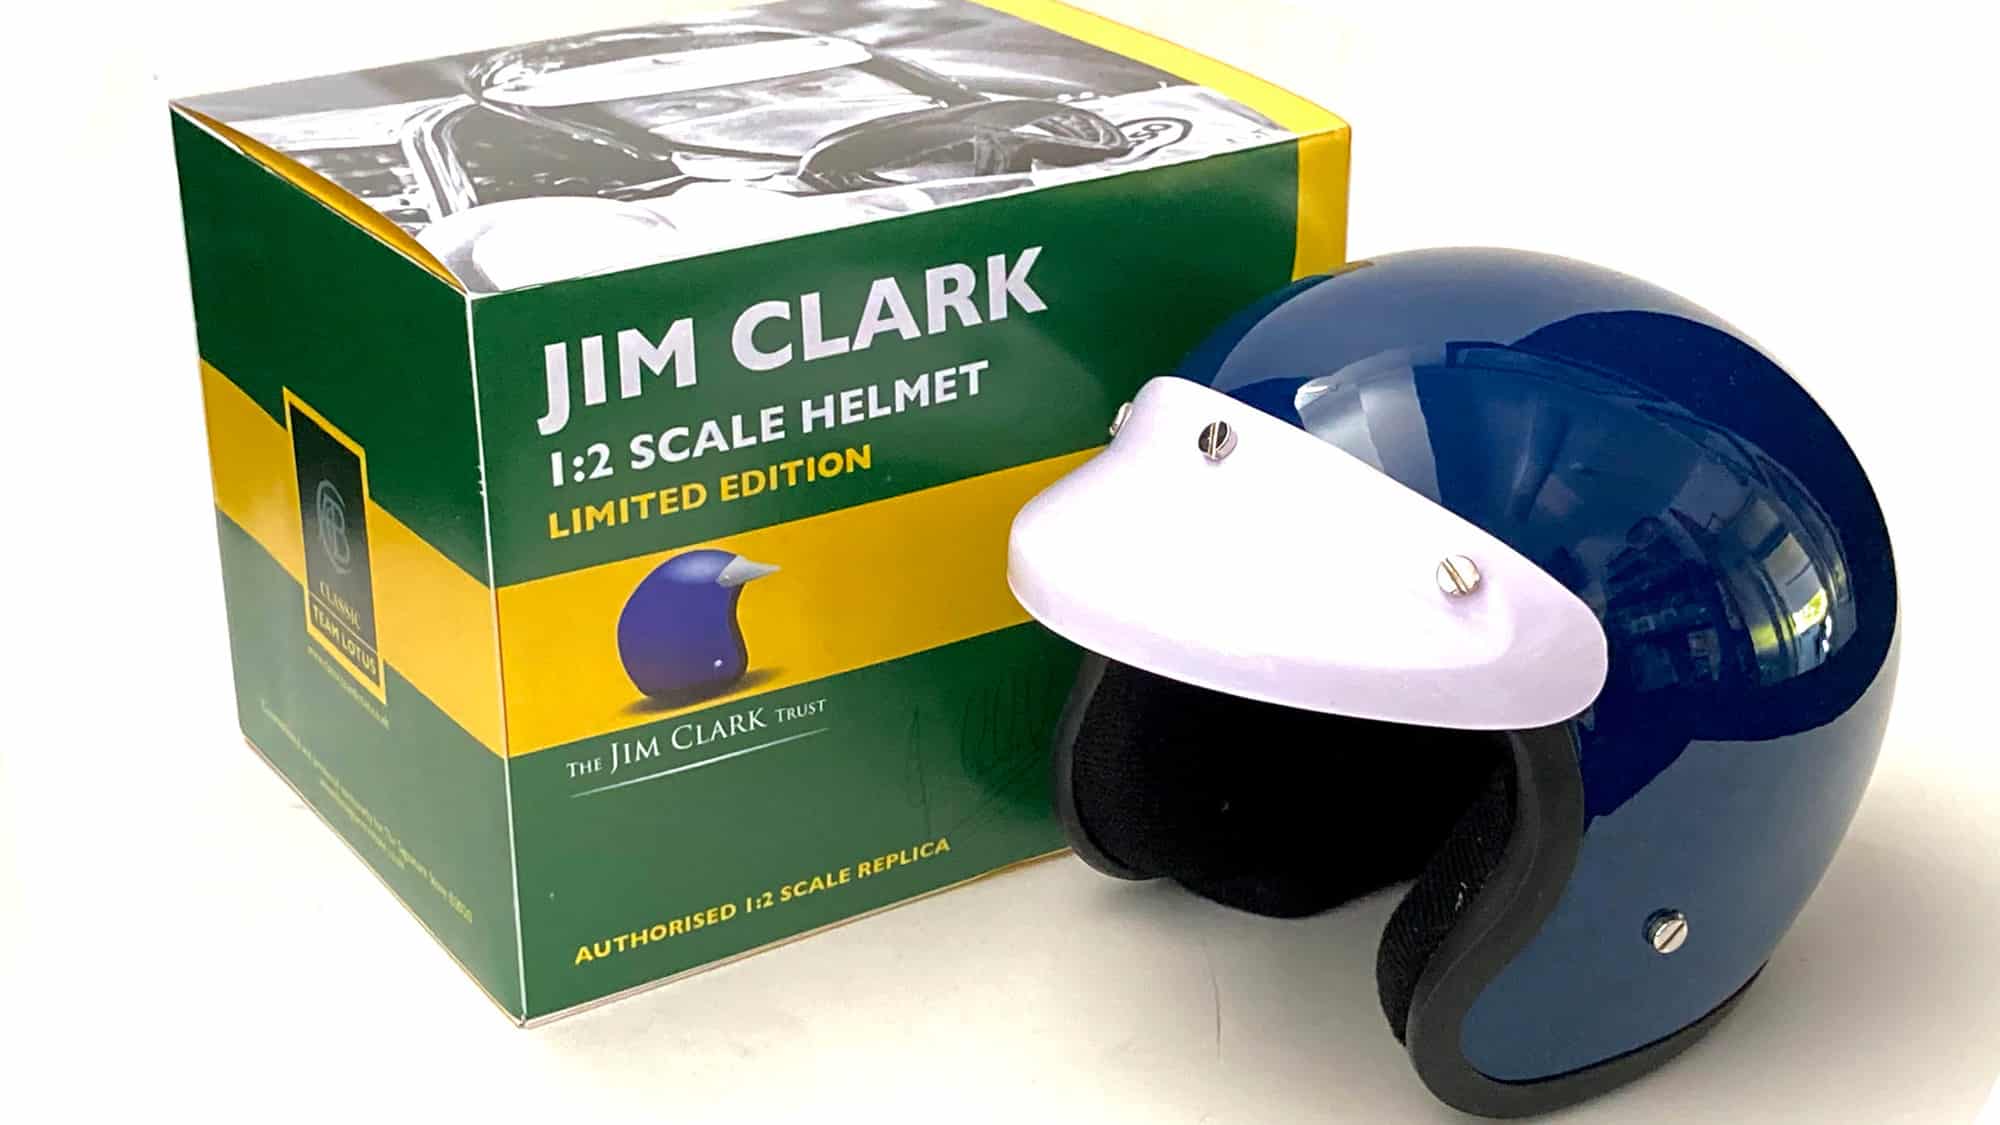 Jim Clark replica helmet